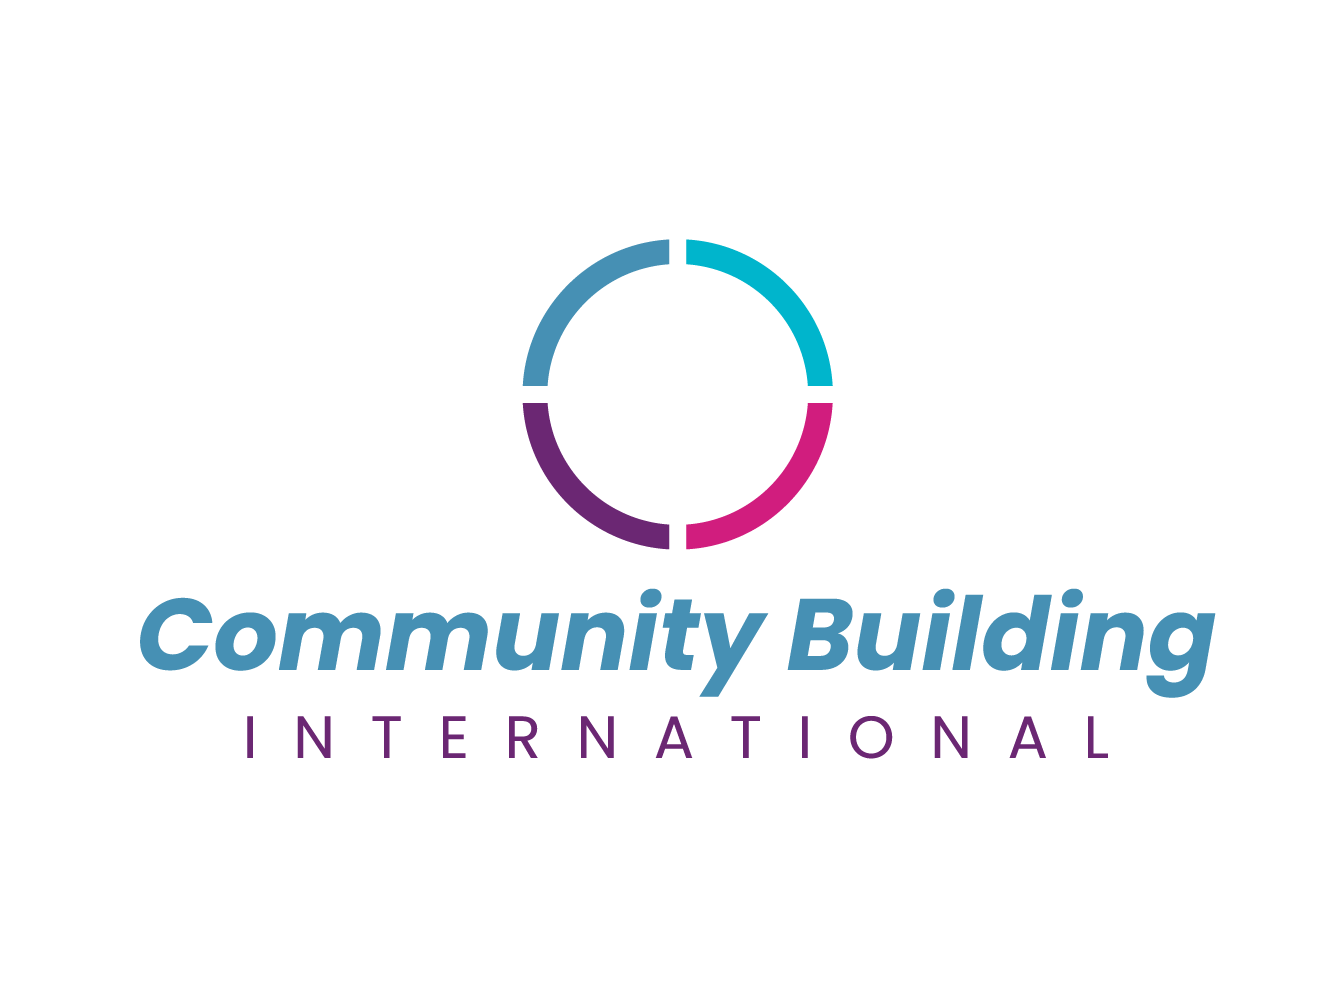 Community Building International